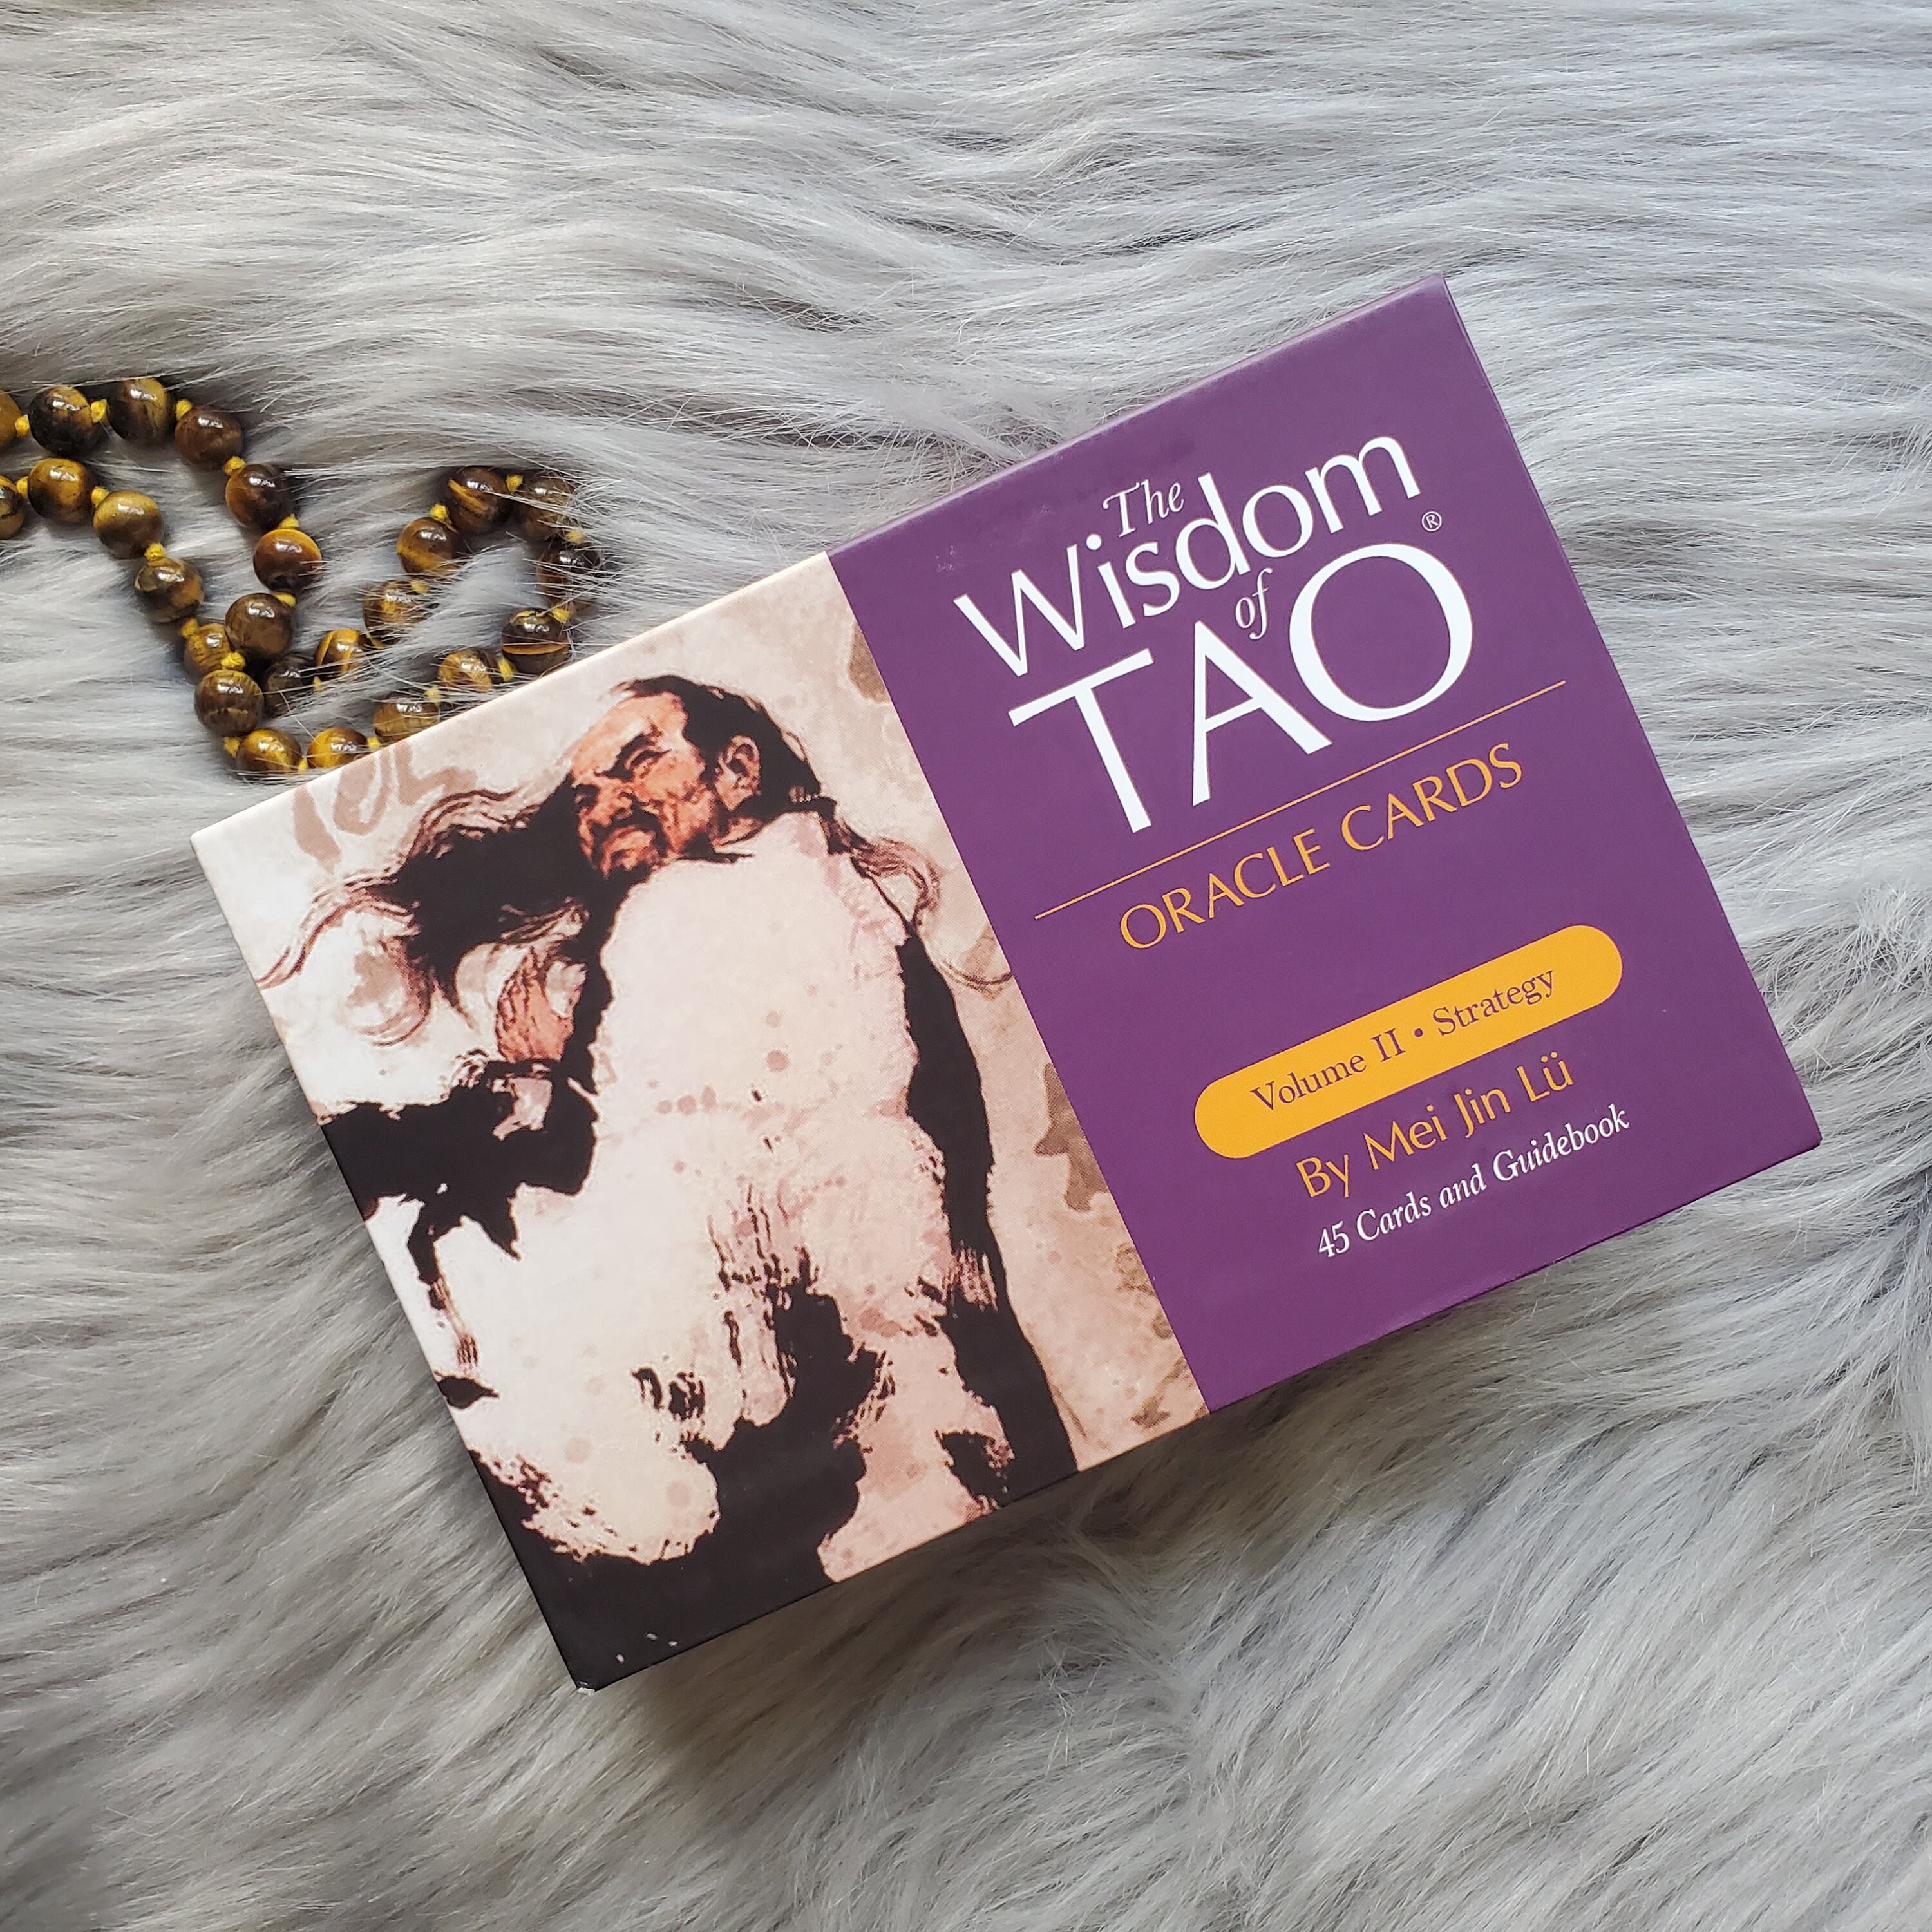 The Wisdom of Tao: Oracle Cards by Mei Jin Lu